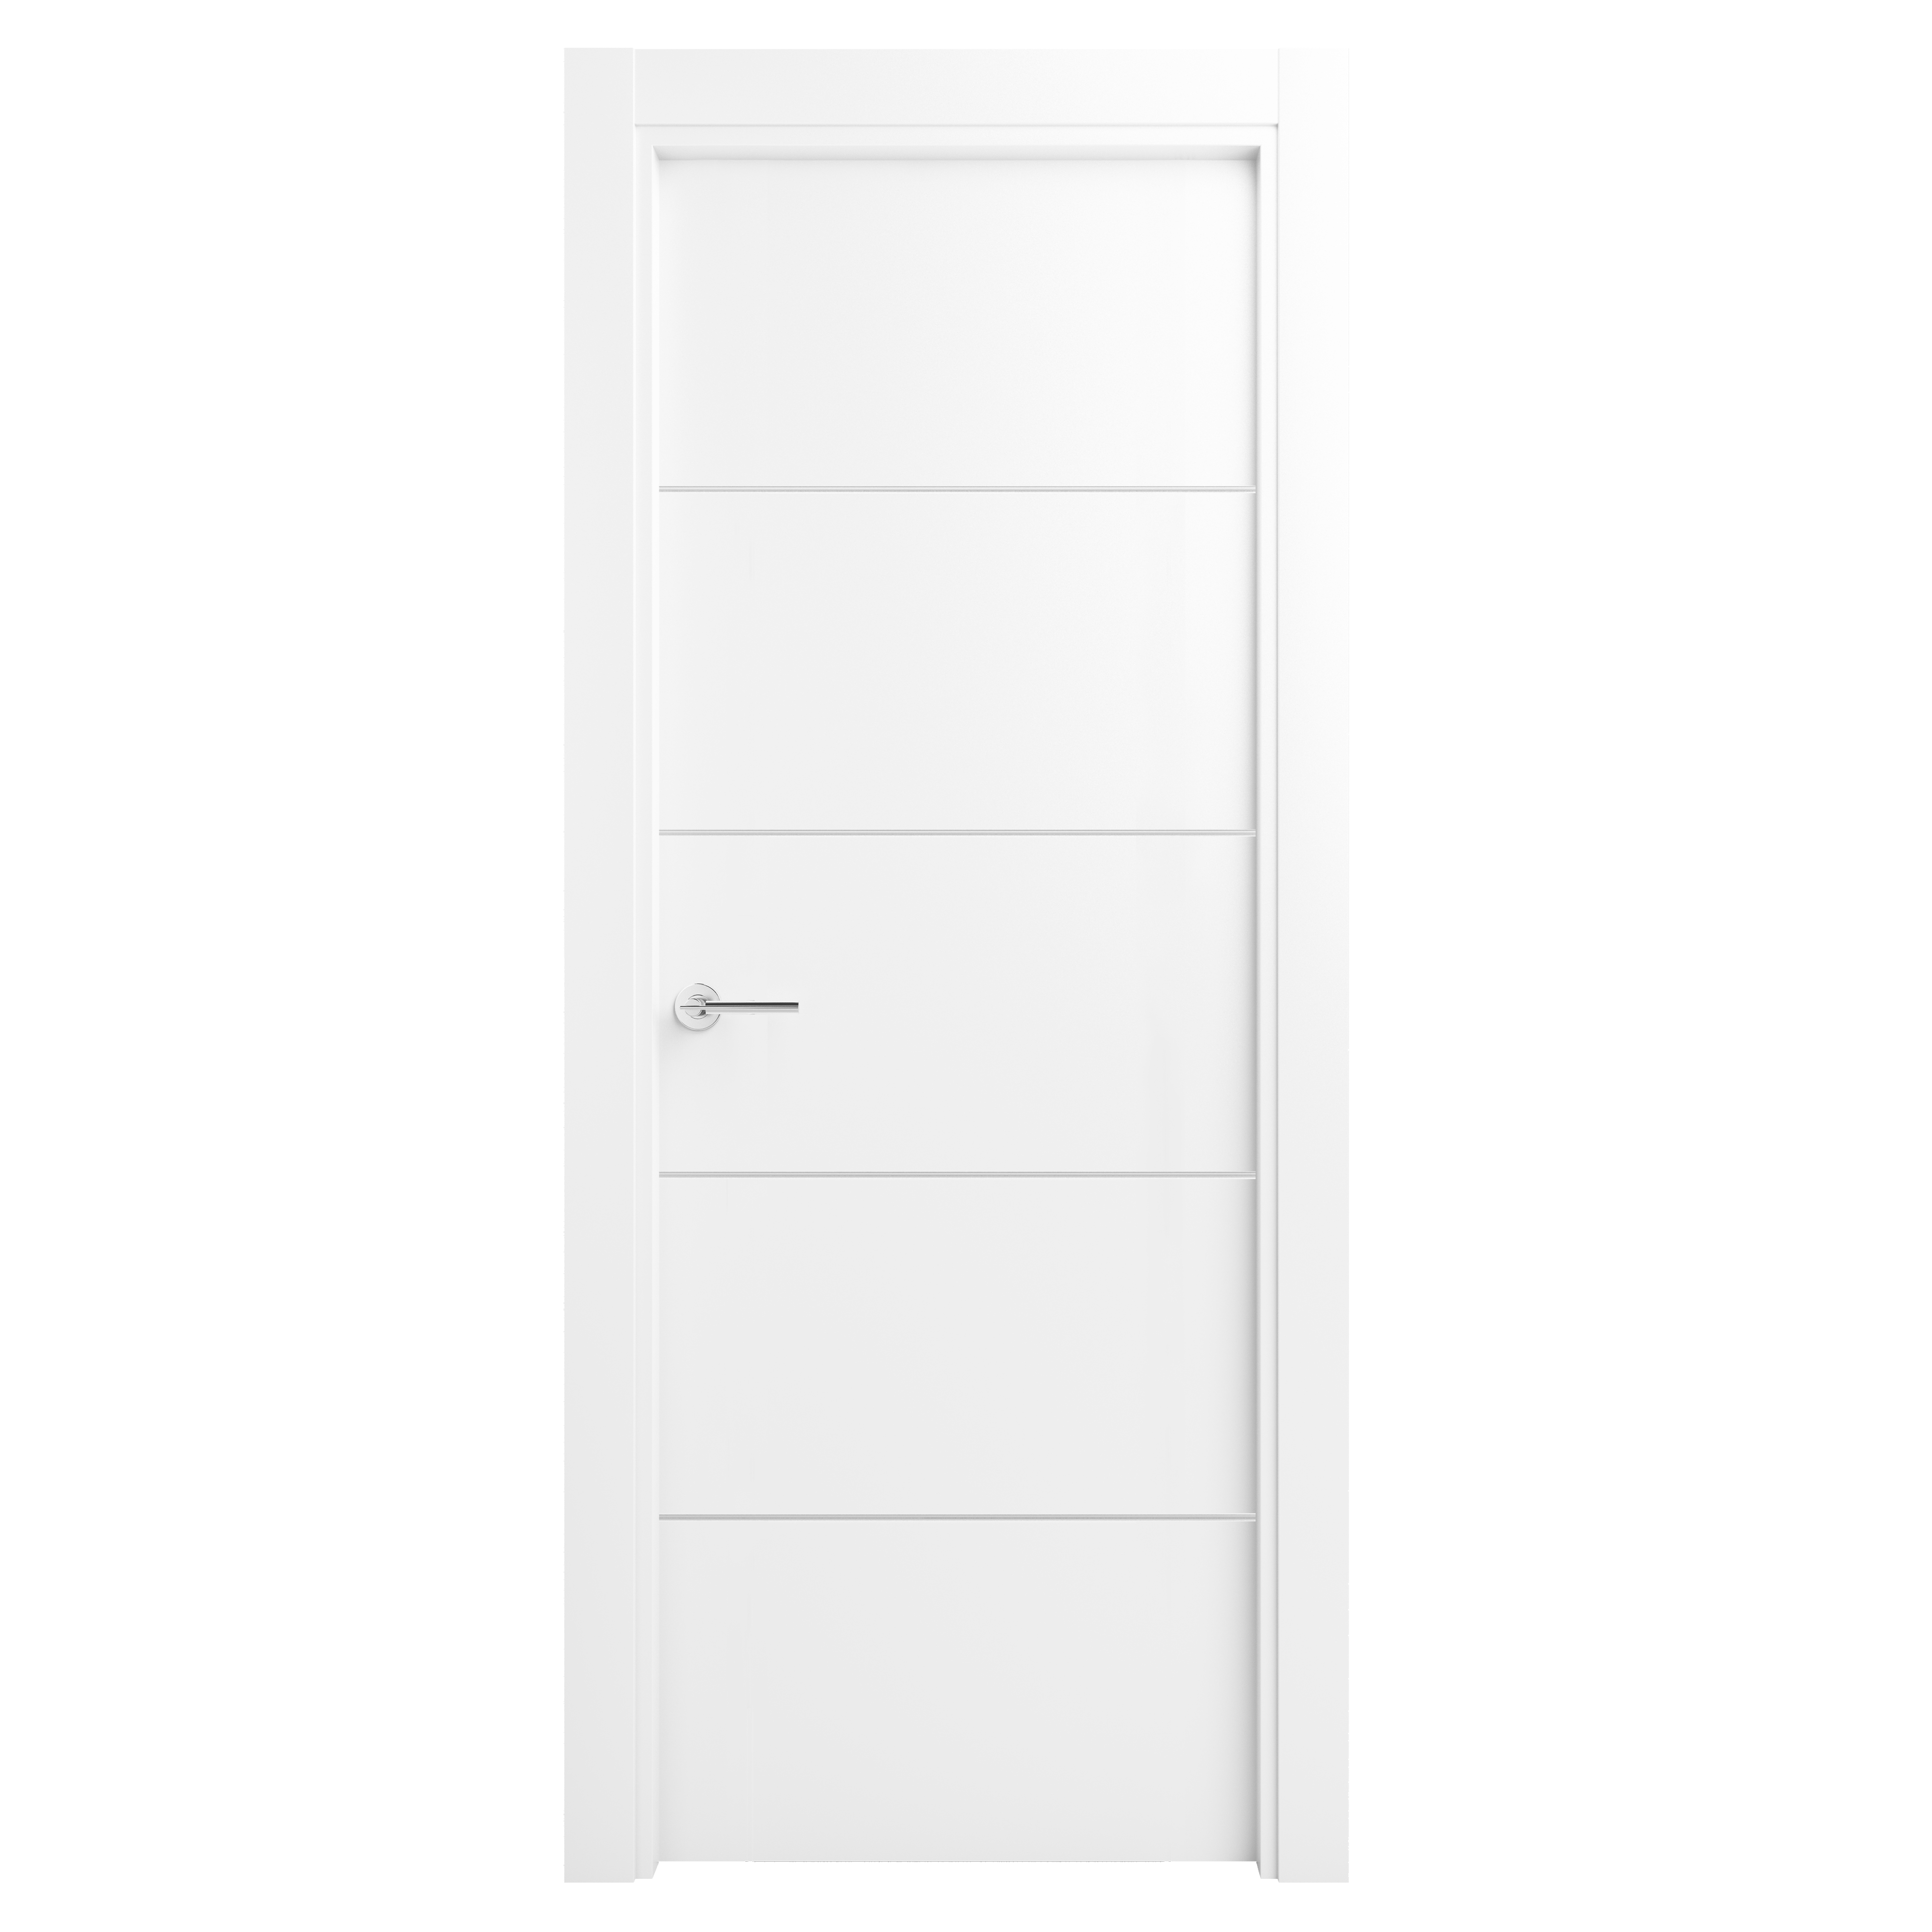 Puerta lucerna premium blanco de apertura izquierda de 82.50 cm